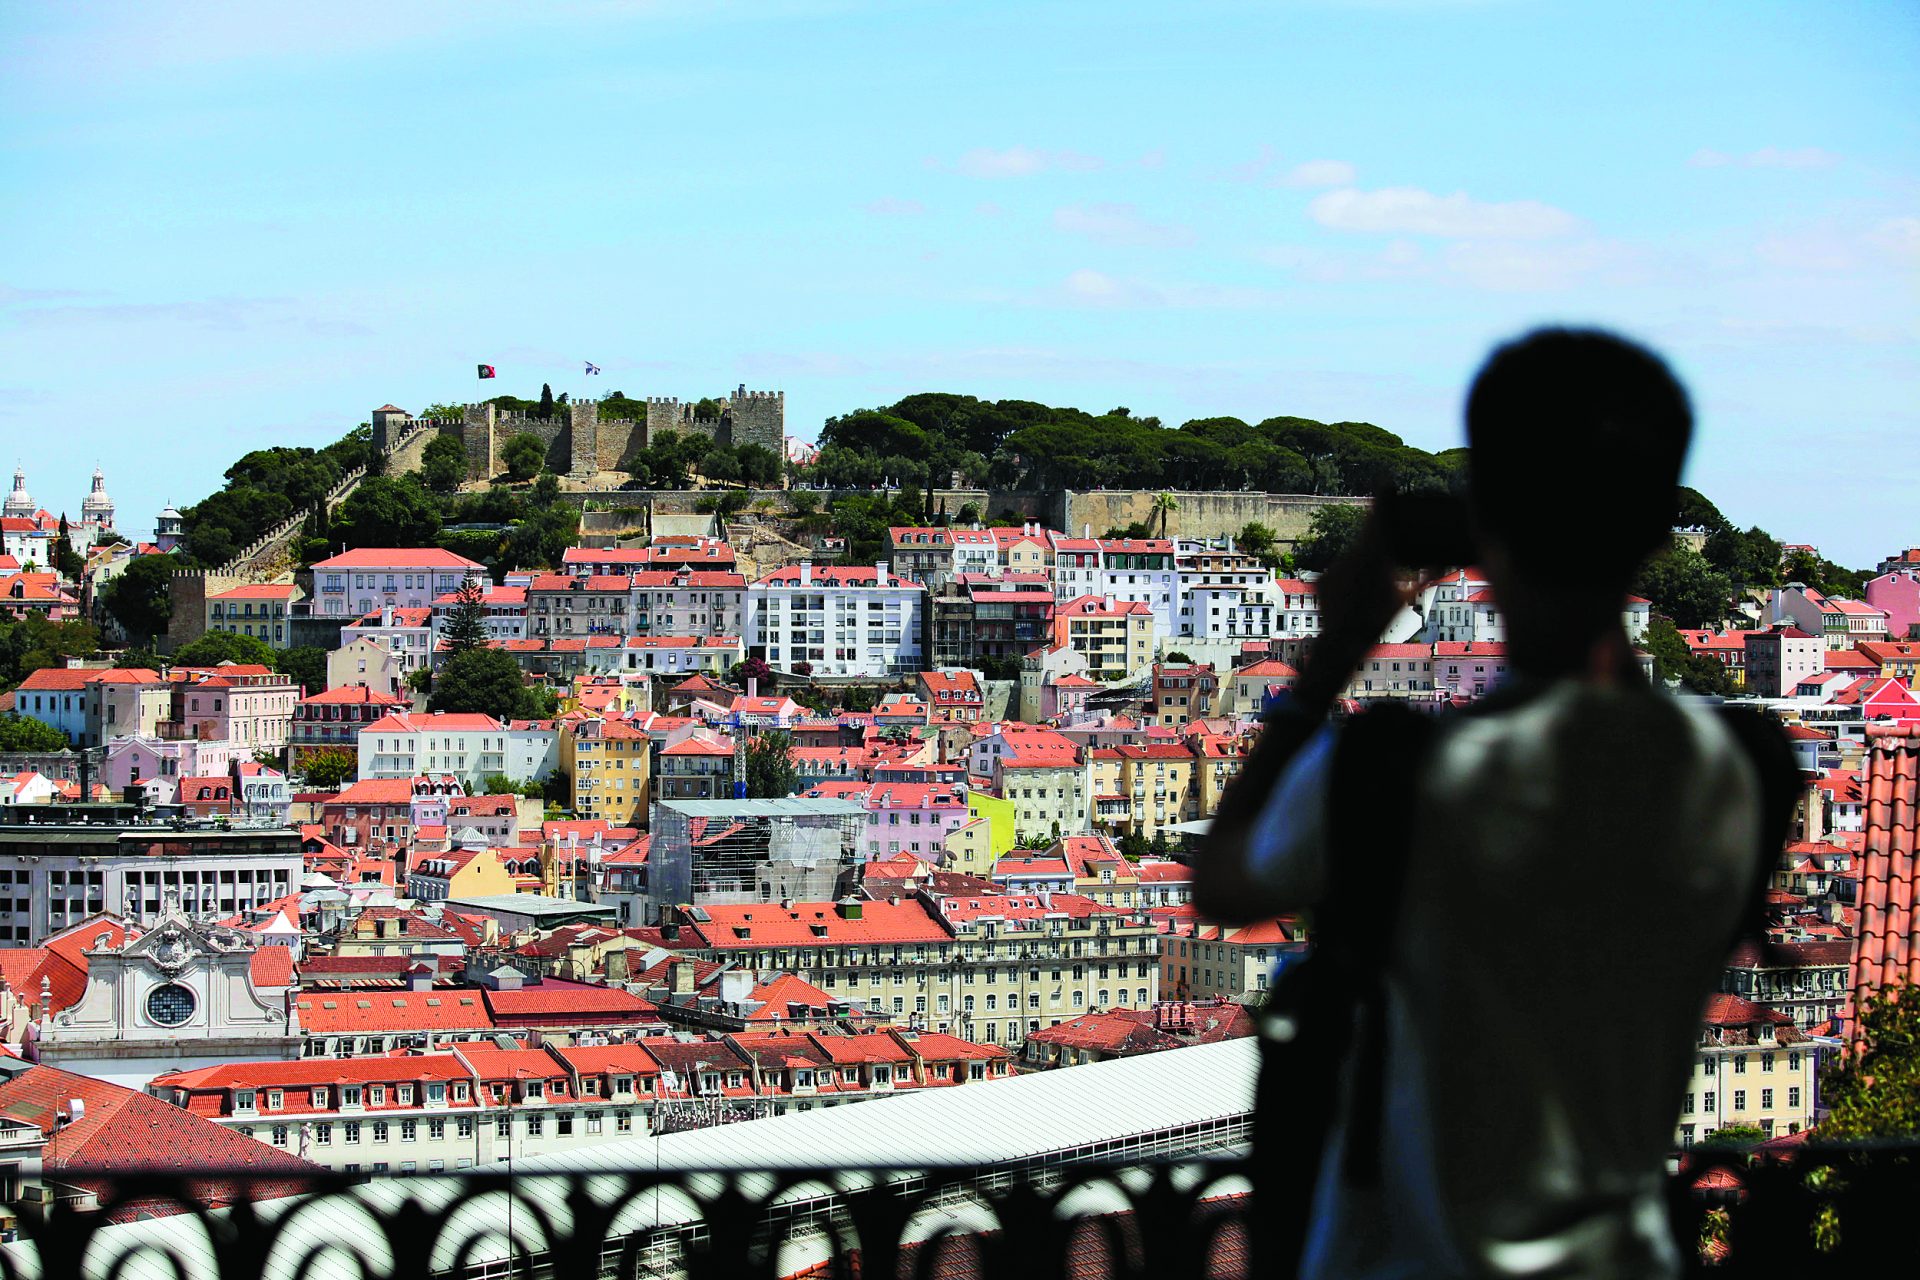 Lisboa. Despesas das famílias disparam face ao resto do país